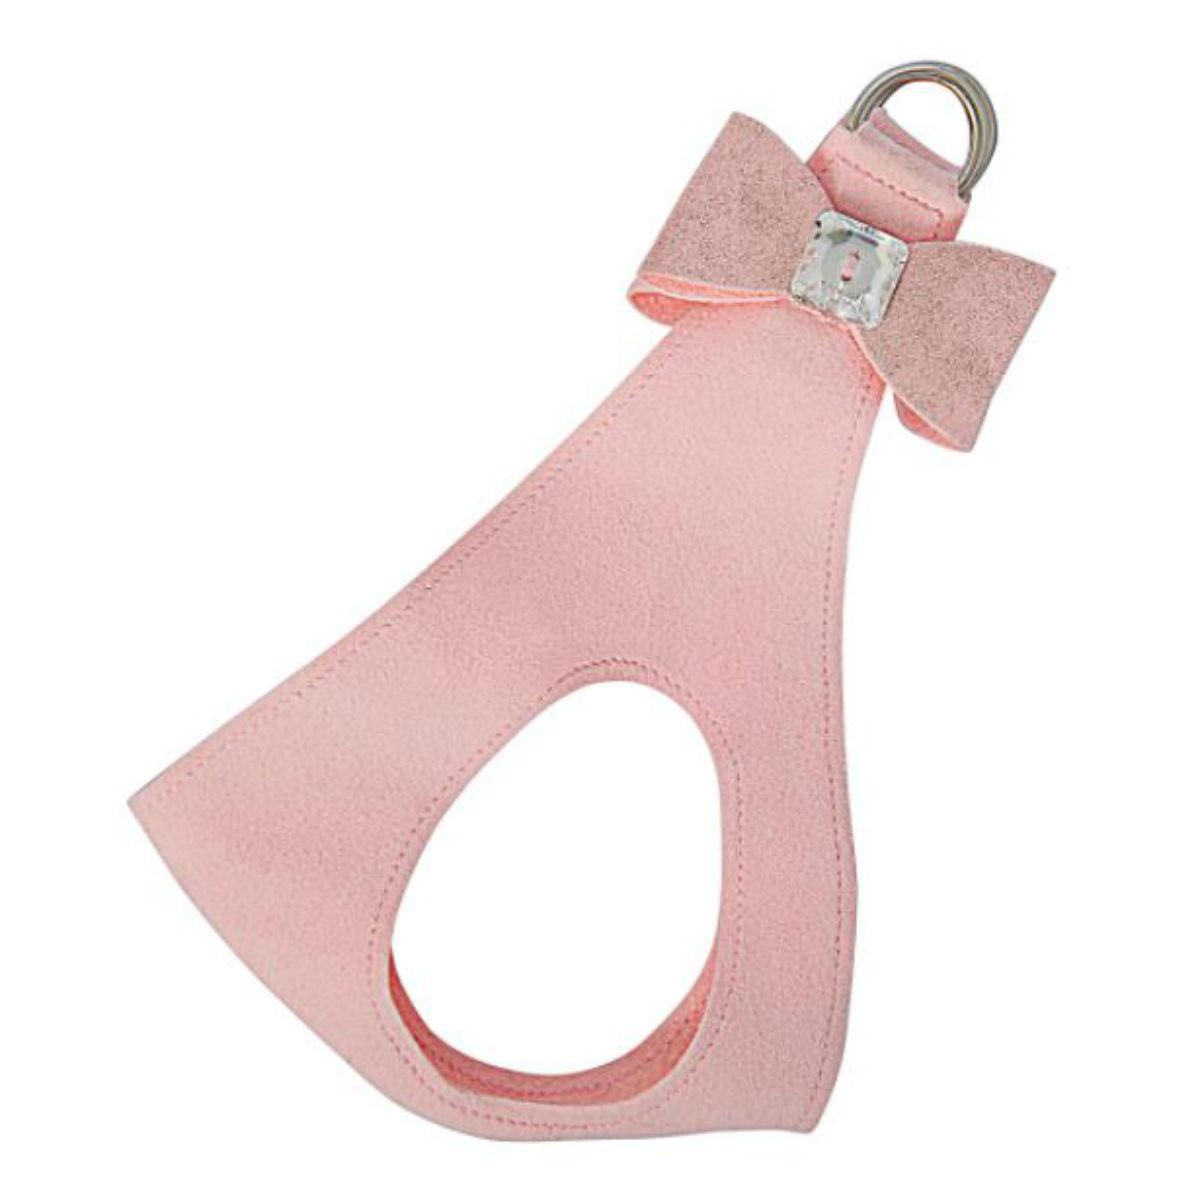 Glitzerati Big Bow Step-In Dog Harness by Susan Lanci - Puppy Pink